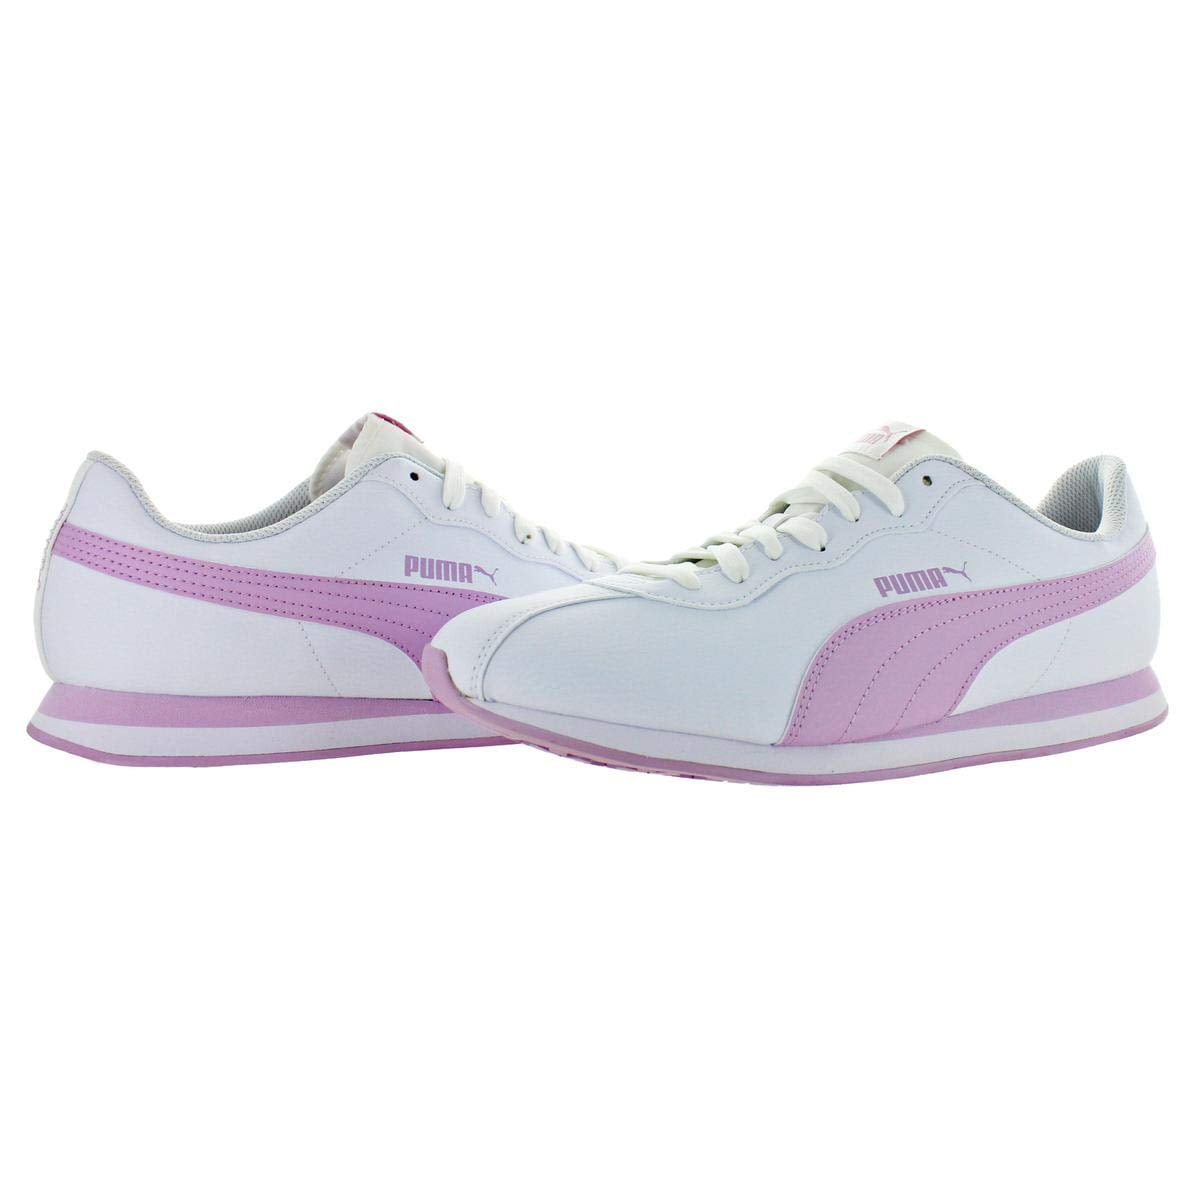 puma womens tennis shoes